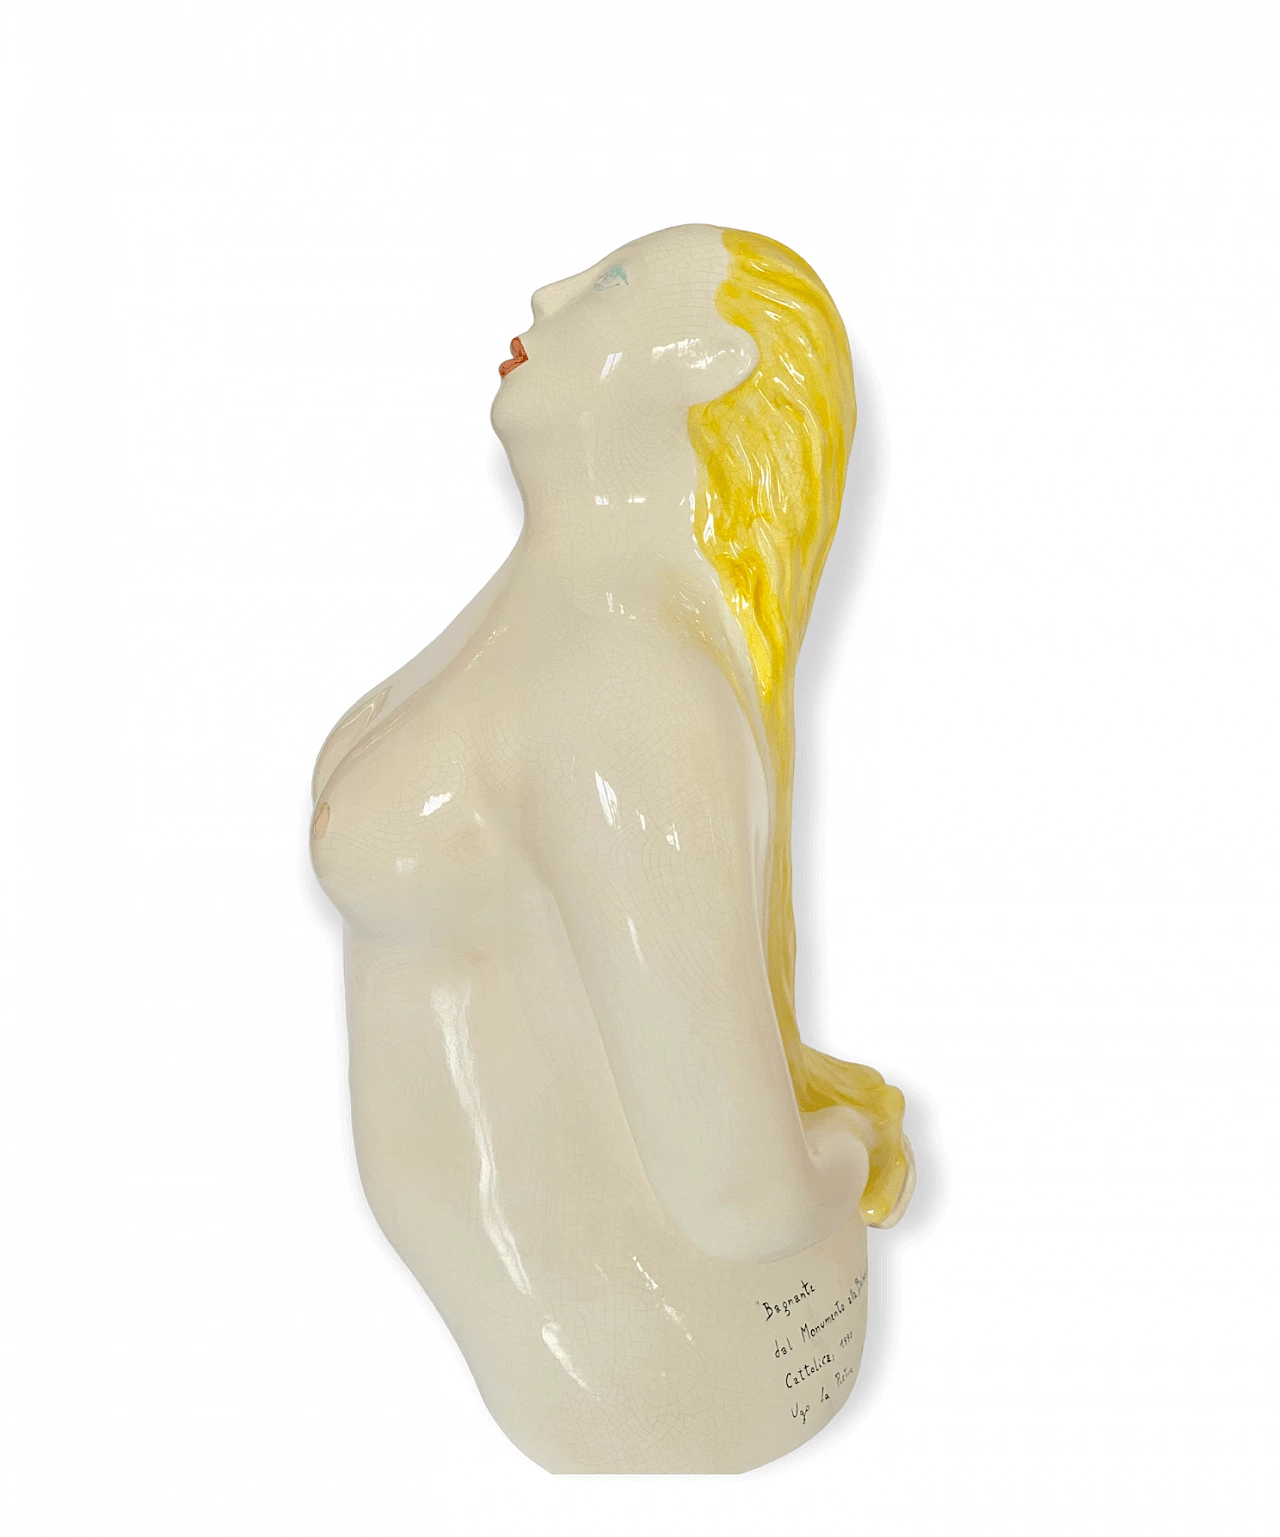 Ugo La Pietra, Bather, glazed ceramic sculpture, 1990 15